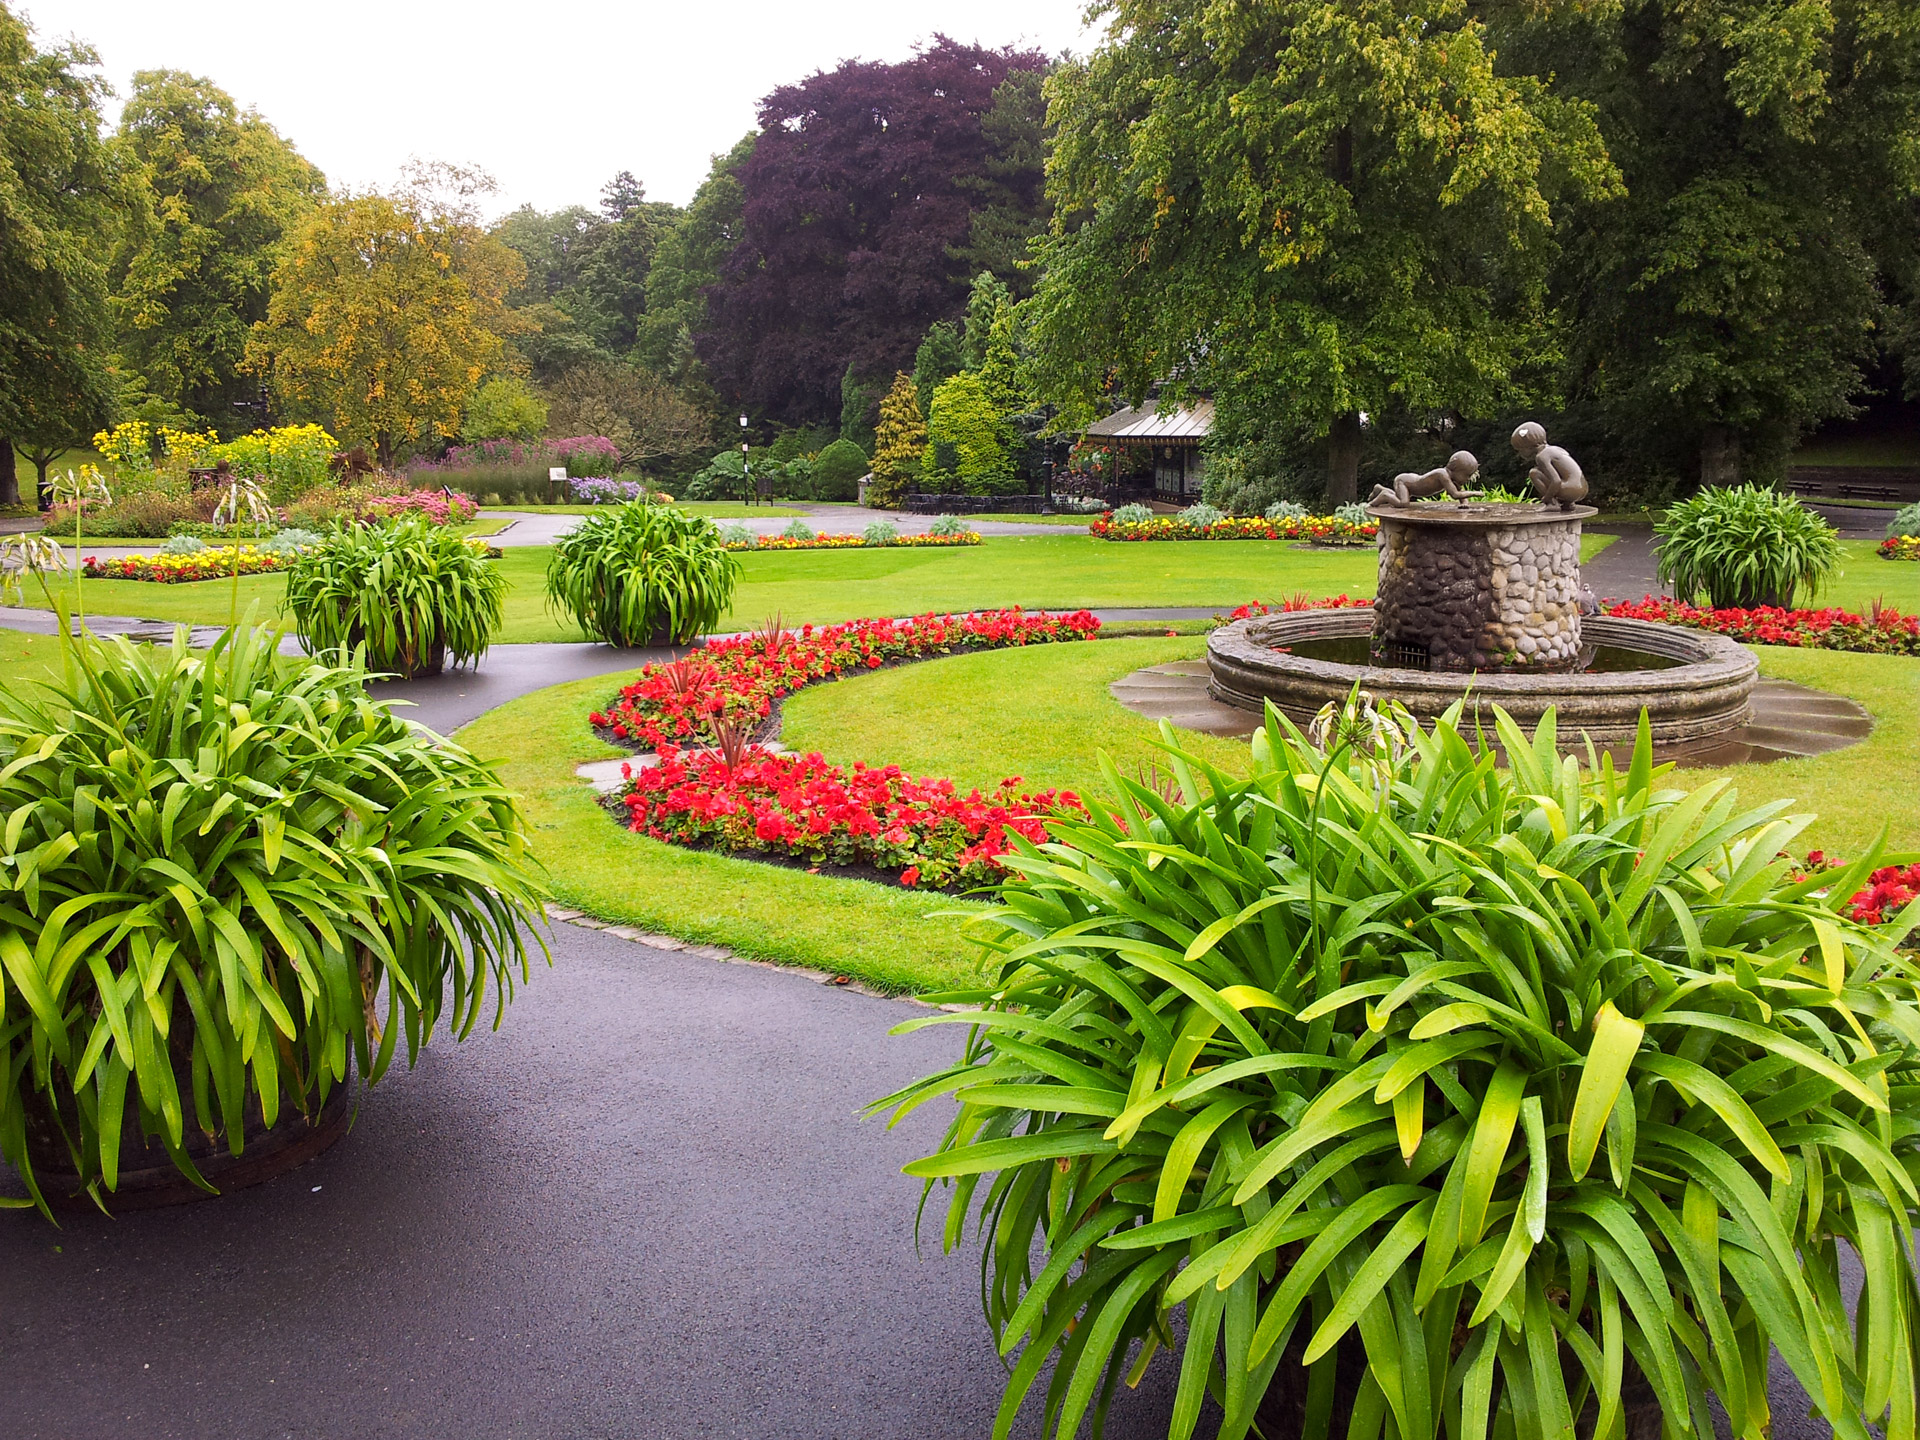 Valley gardens in Harrogate